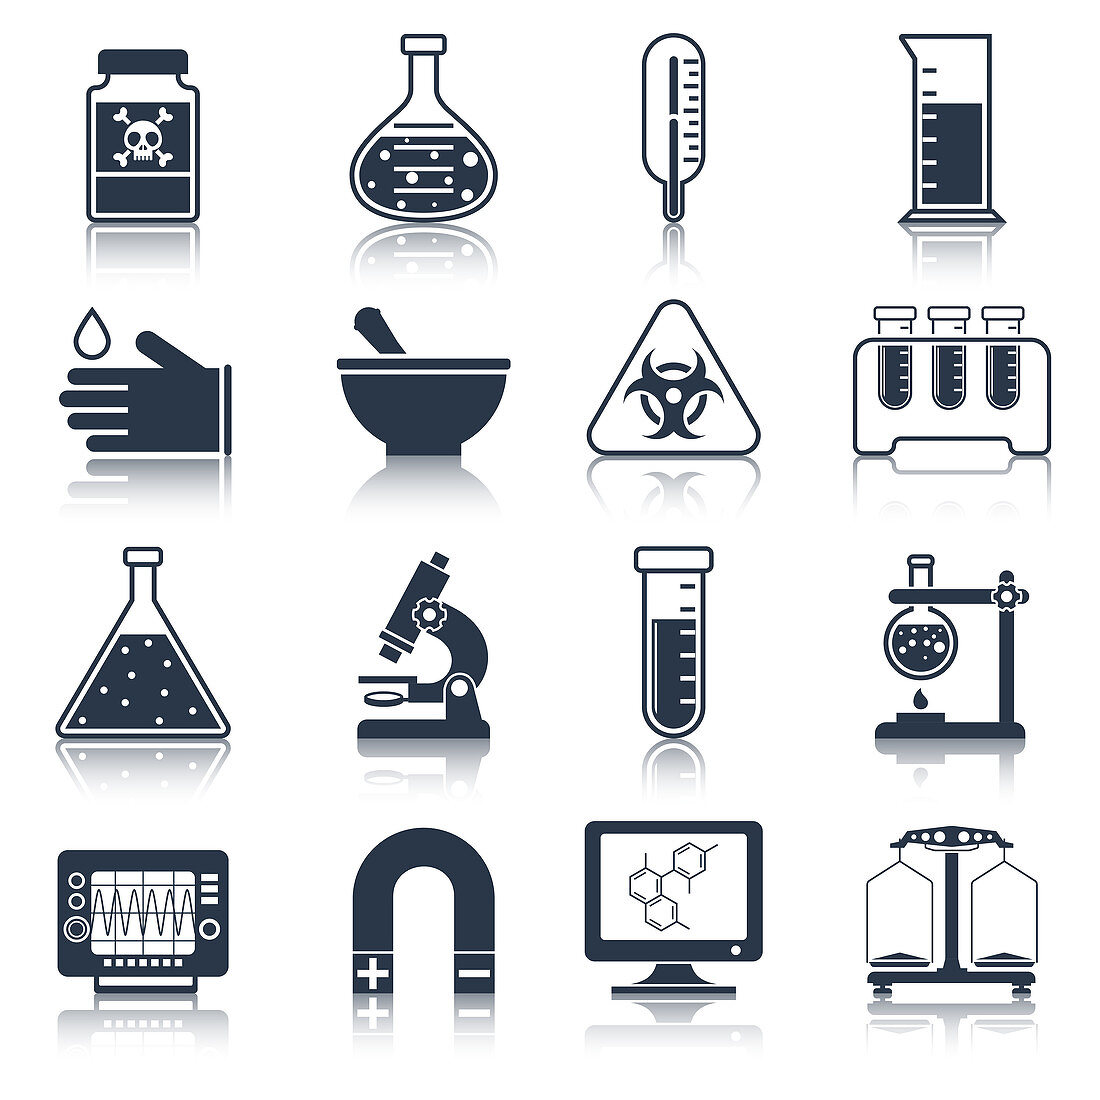 Laboratory icons, illustrations